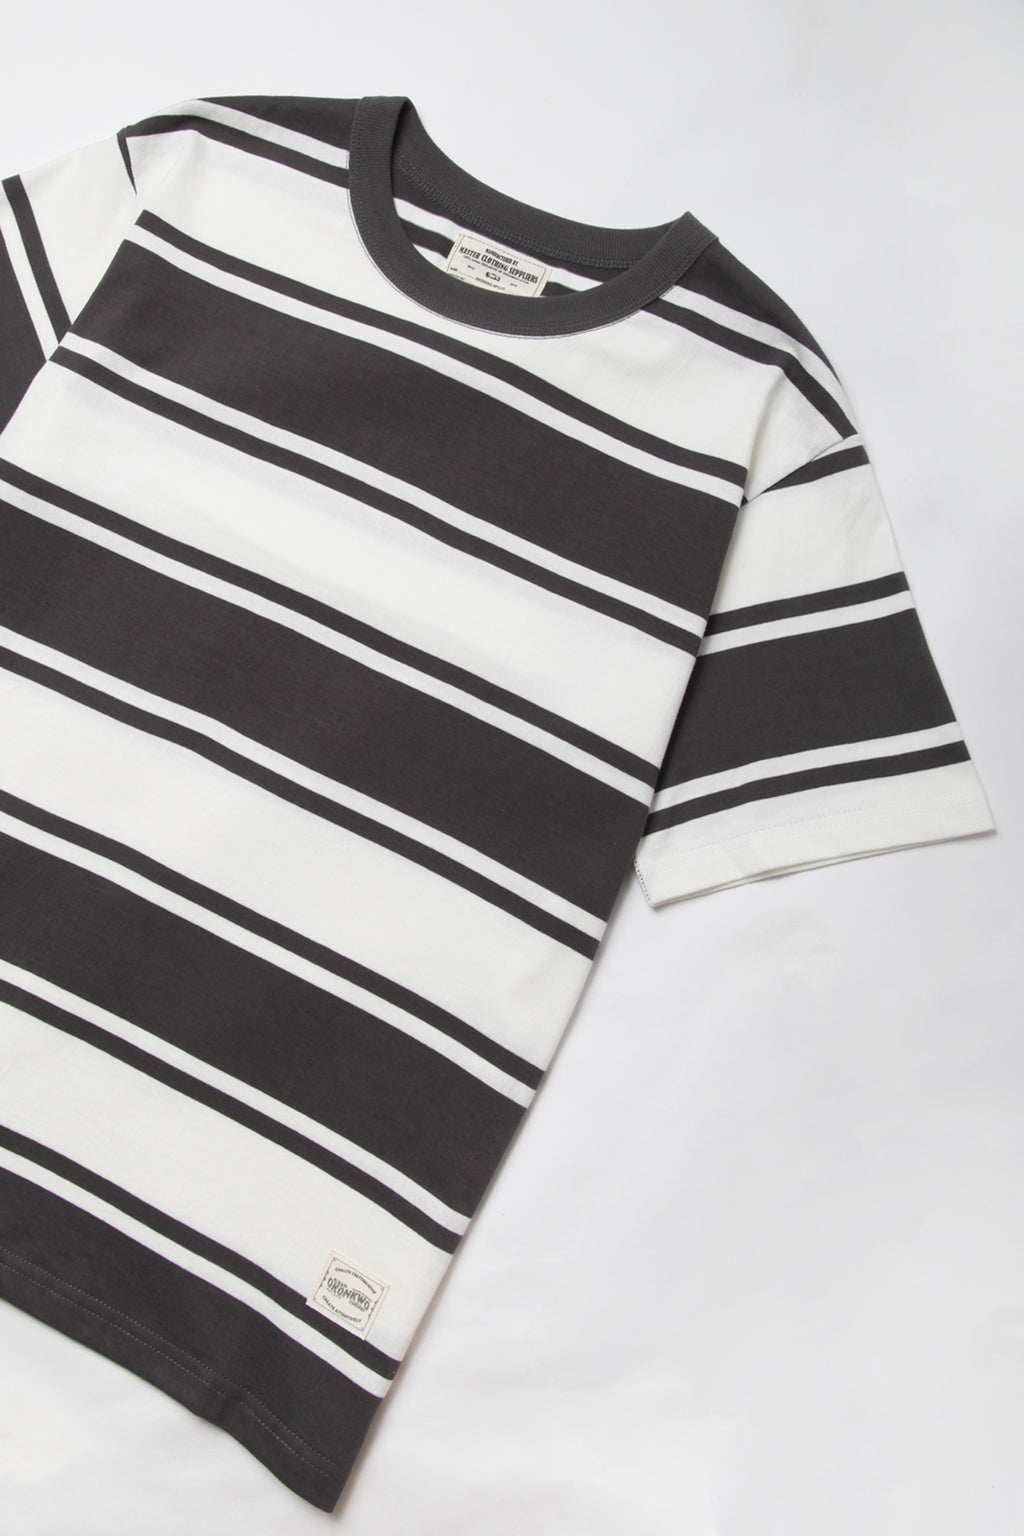 Okonkwo MFG - Short Sleeve Striped Tee - Grey/White